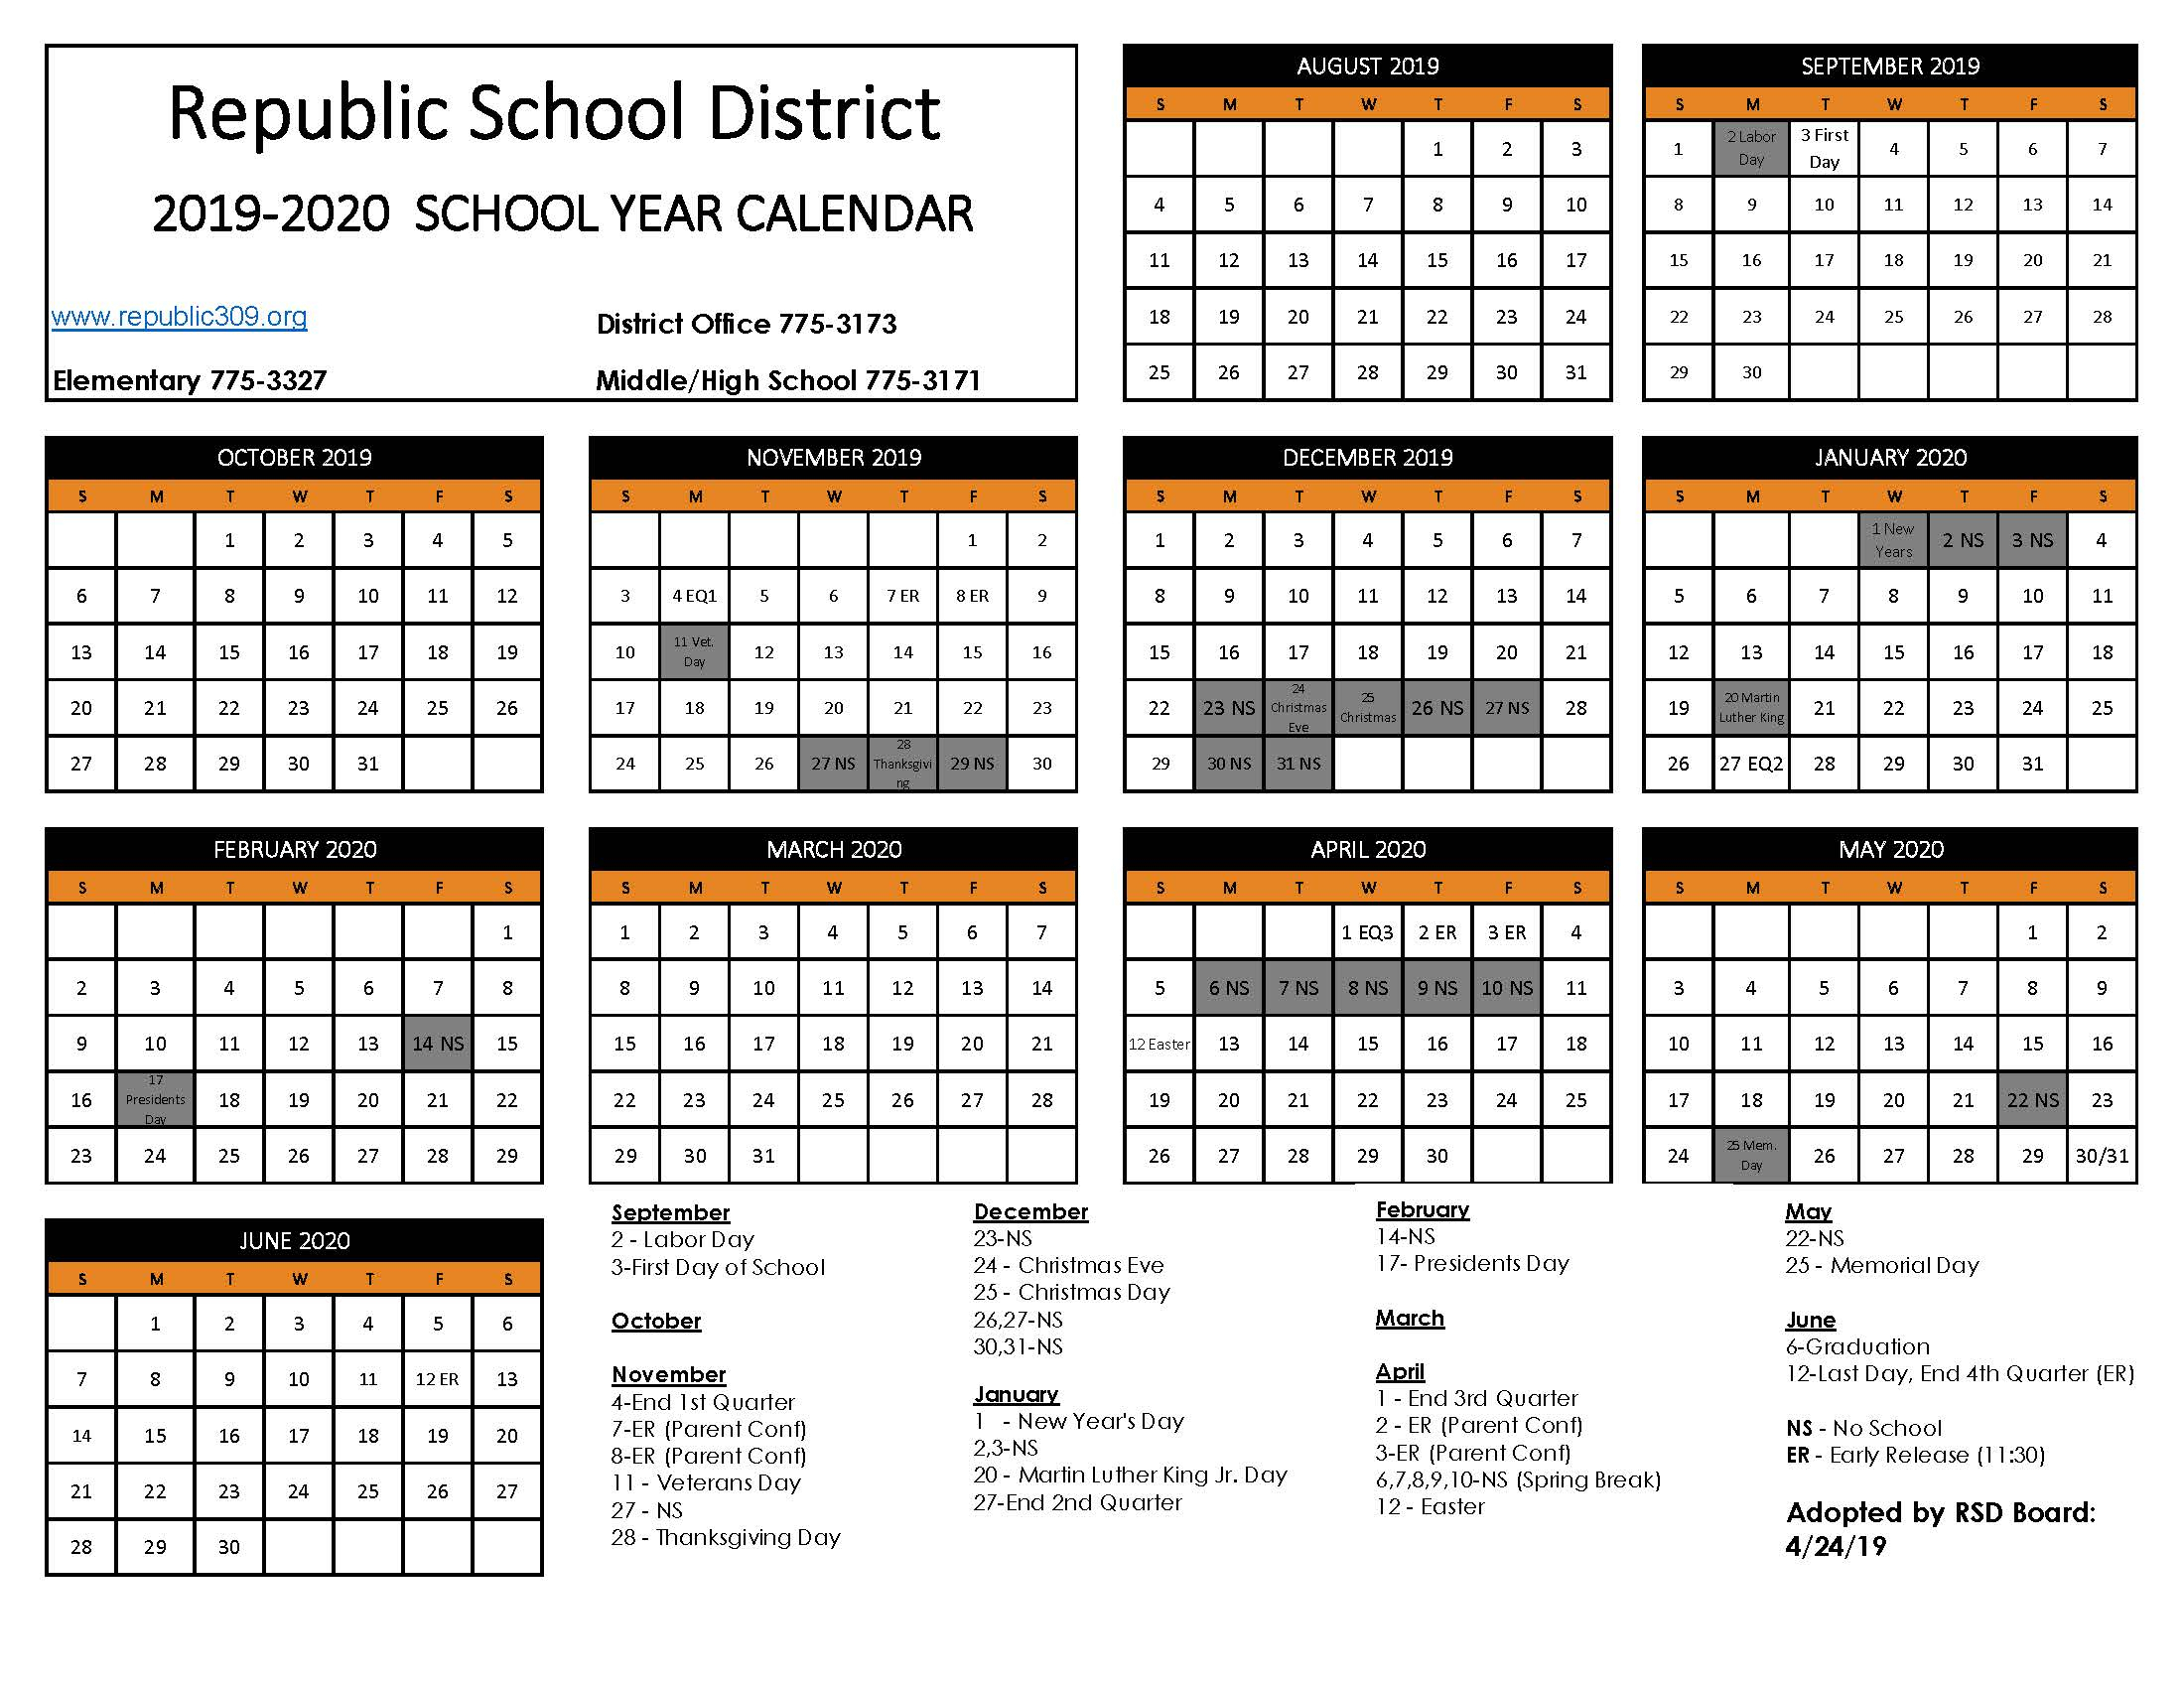 Republic School District Calendar 2020 Publicholidays